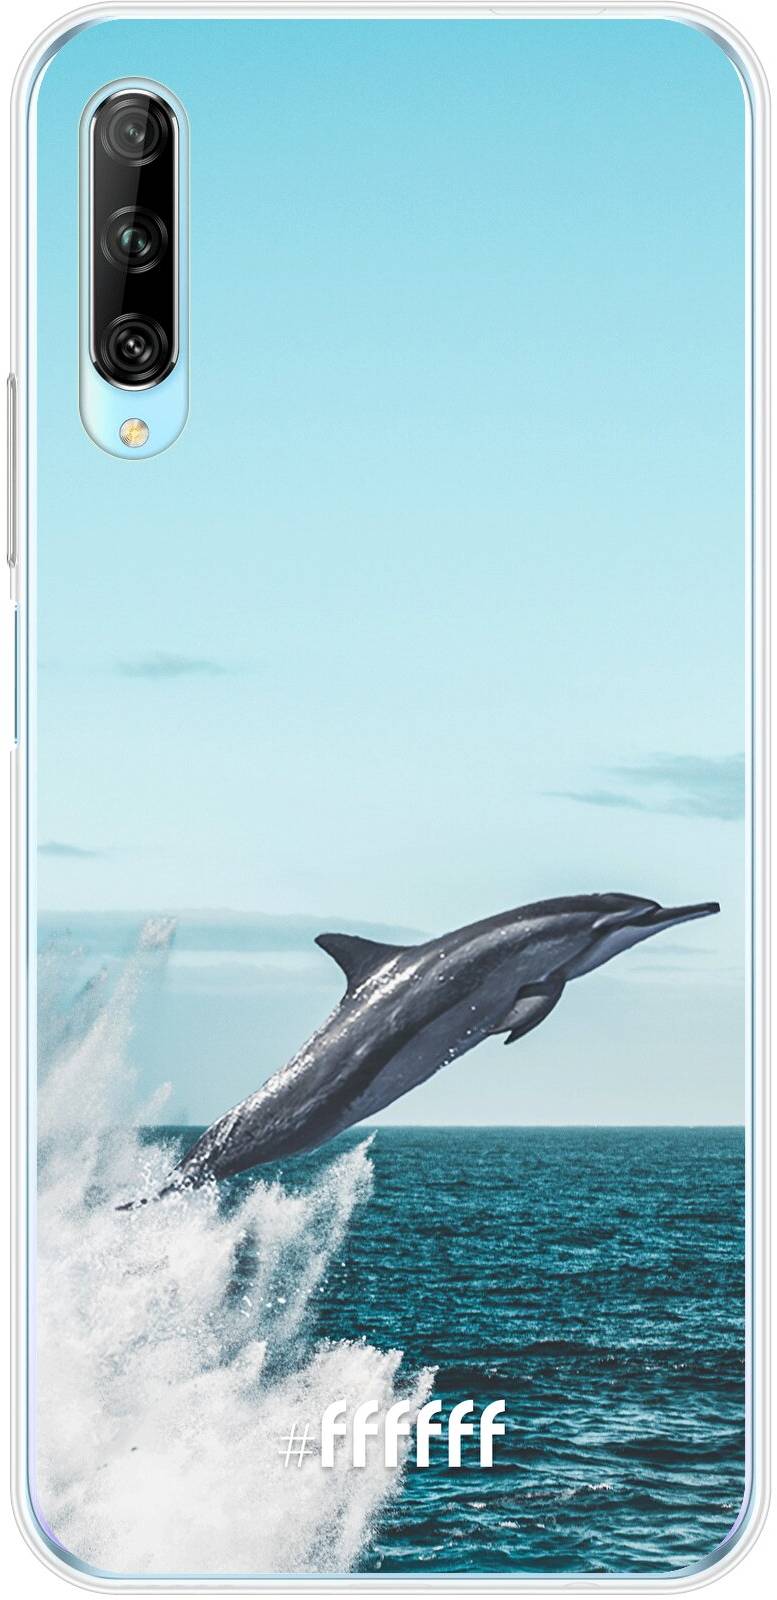 Dolphin P Smart Pro